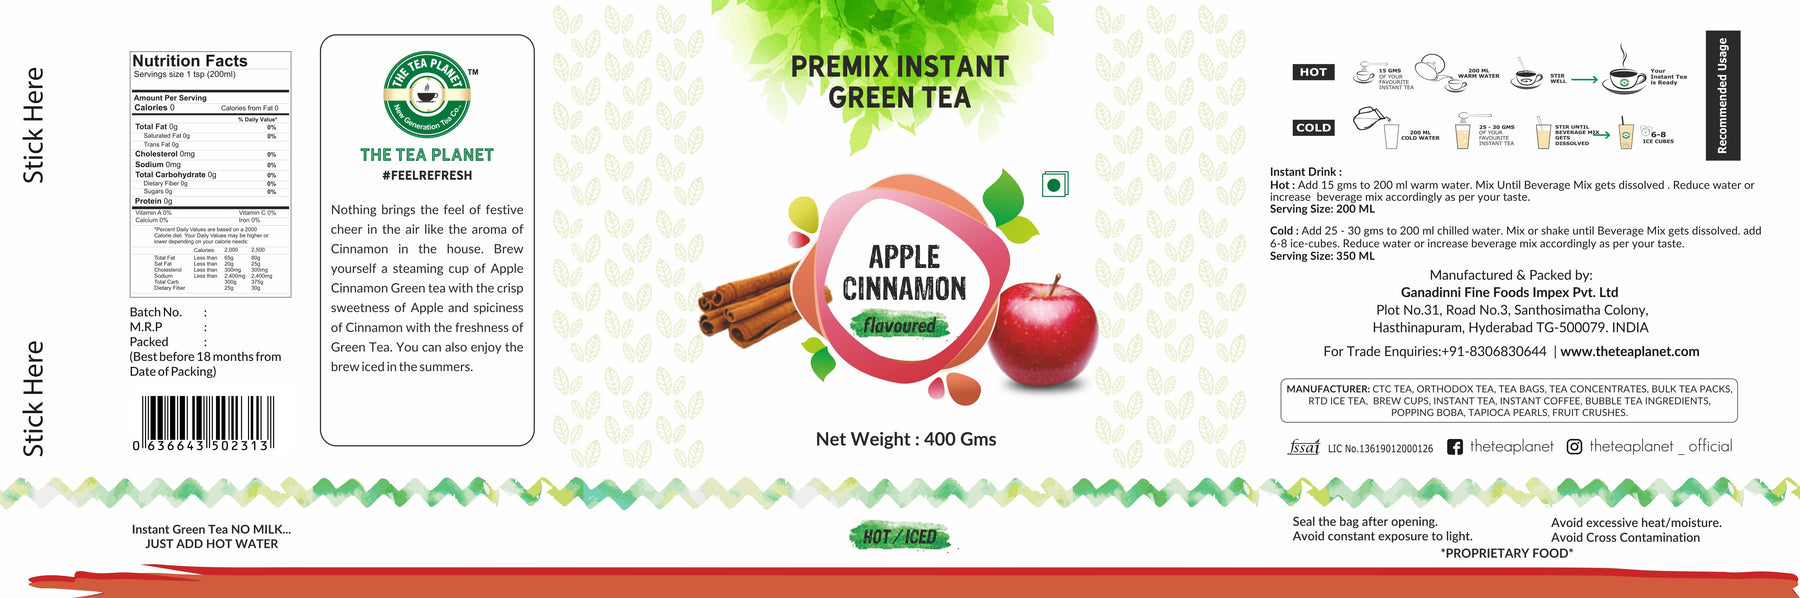 Apple Cinnamon Flavored Instant Green Tea - 400 gms